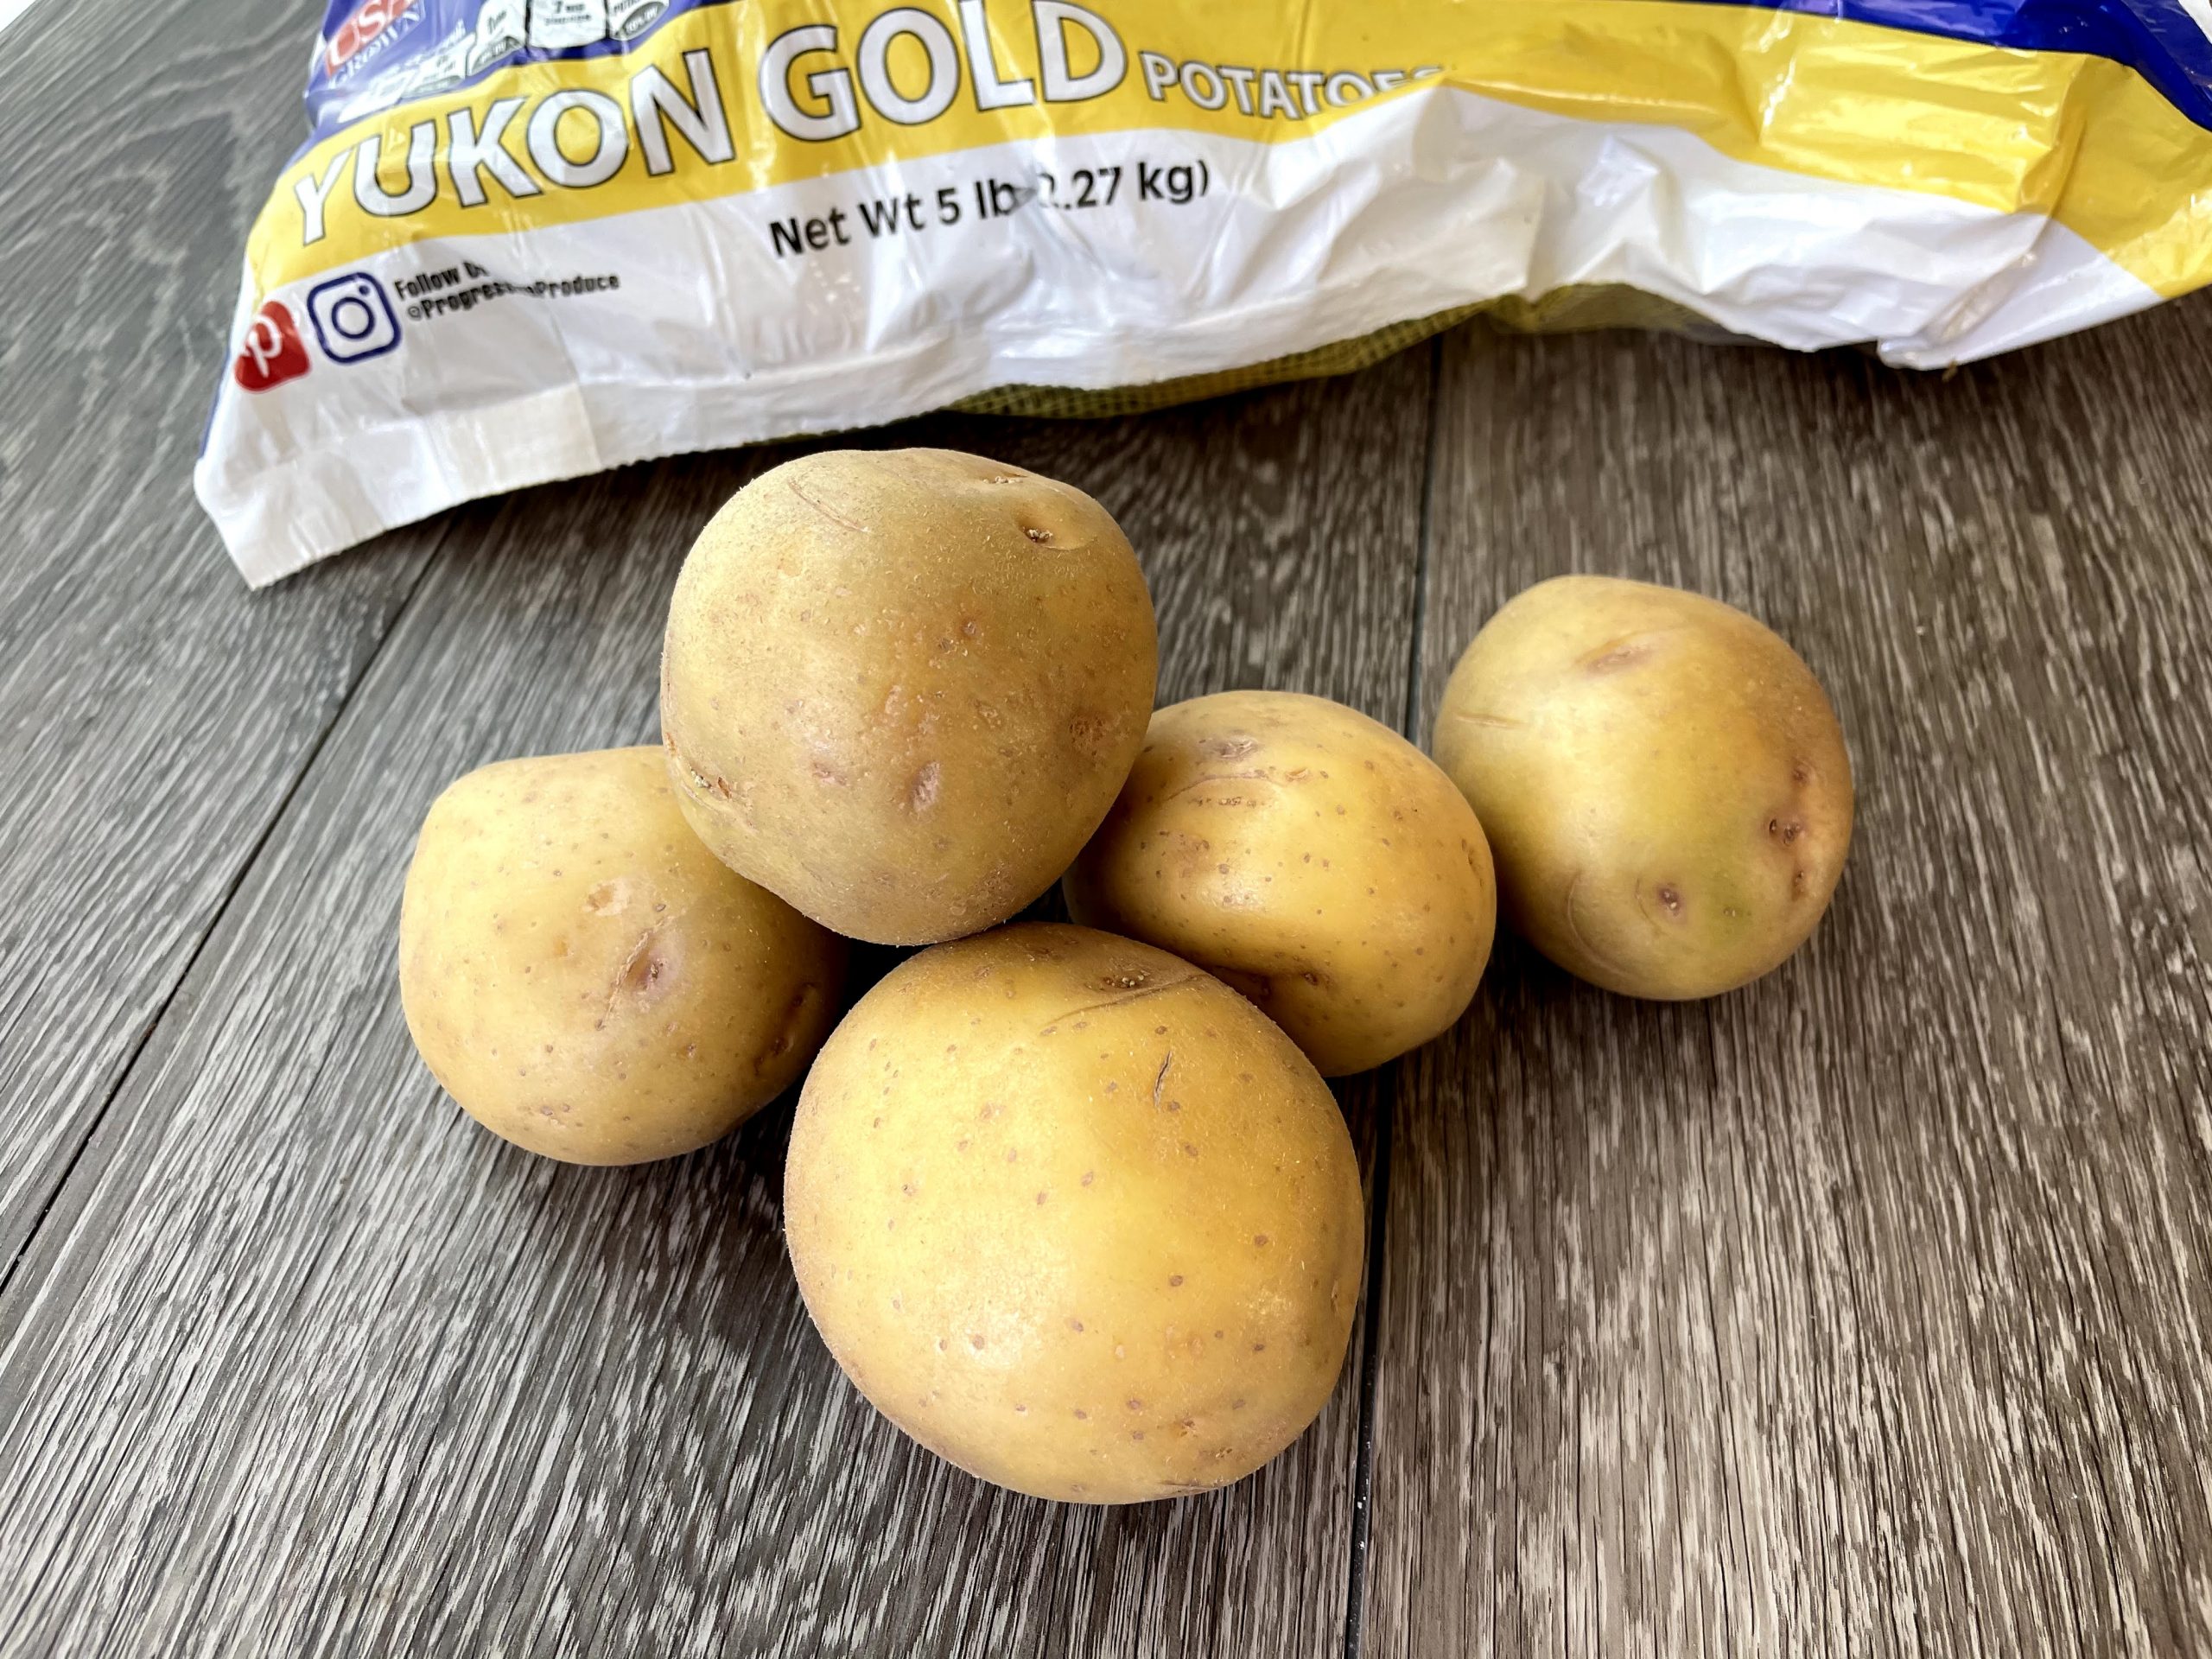 Yukon gold potatoes for roasting.